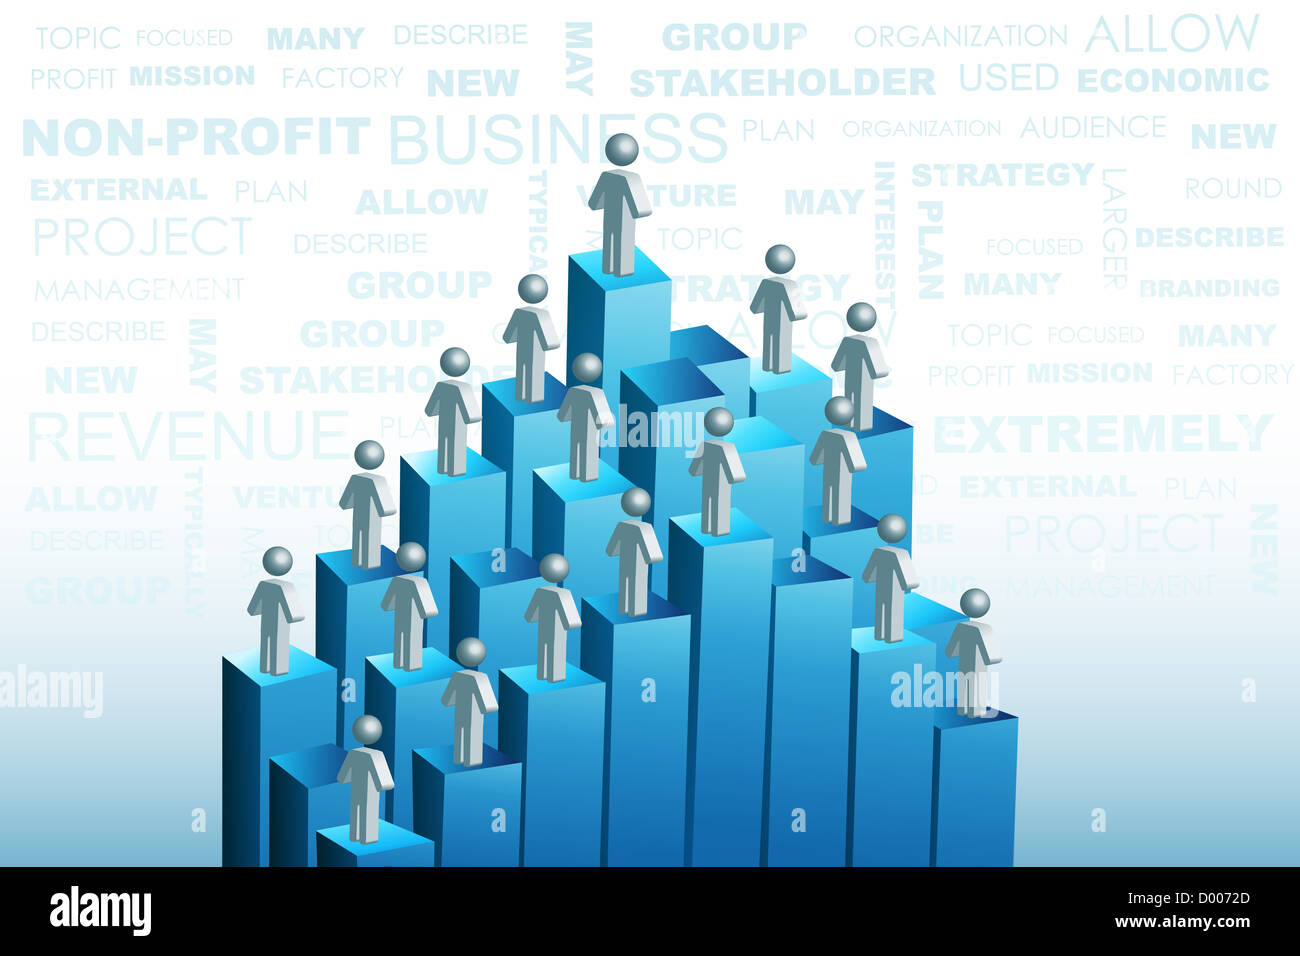 illustration of organization structure Stock Photo